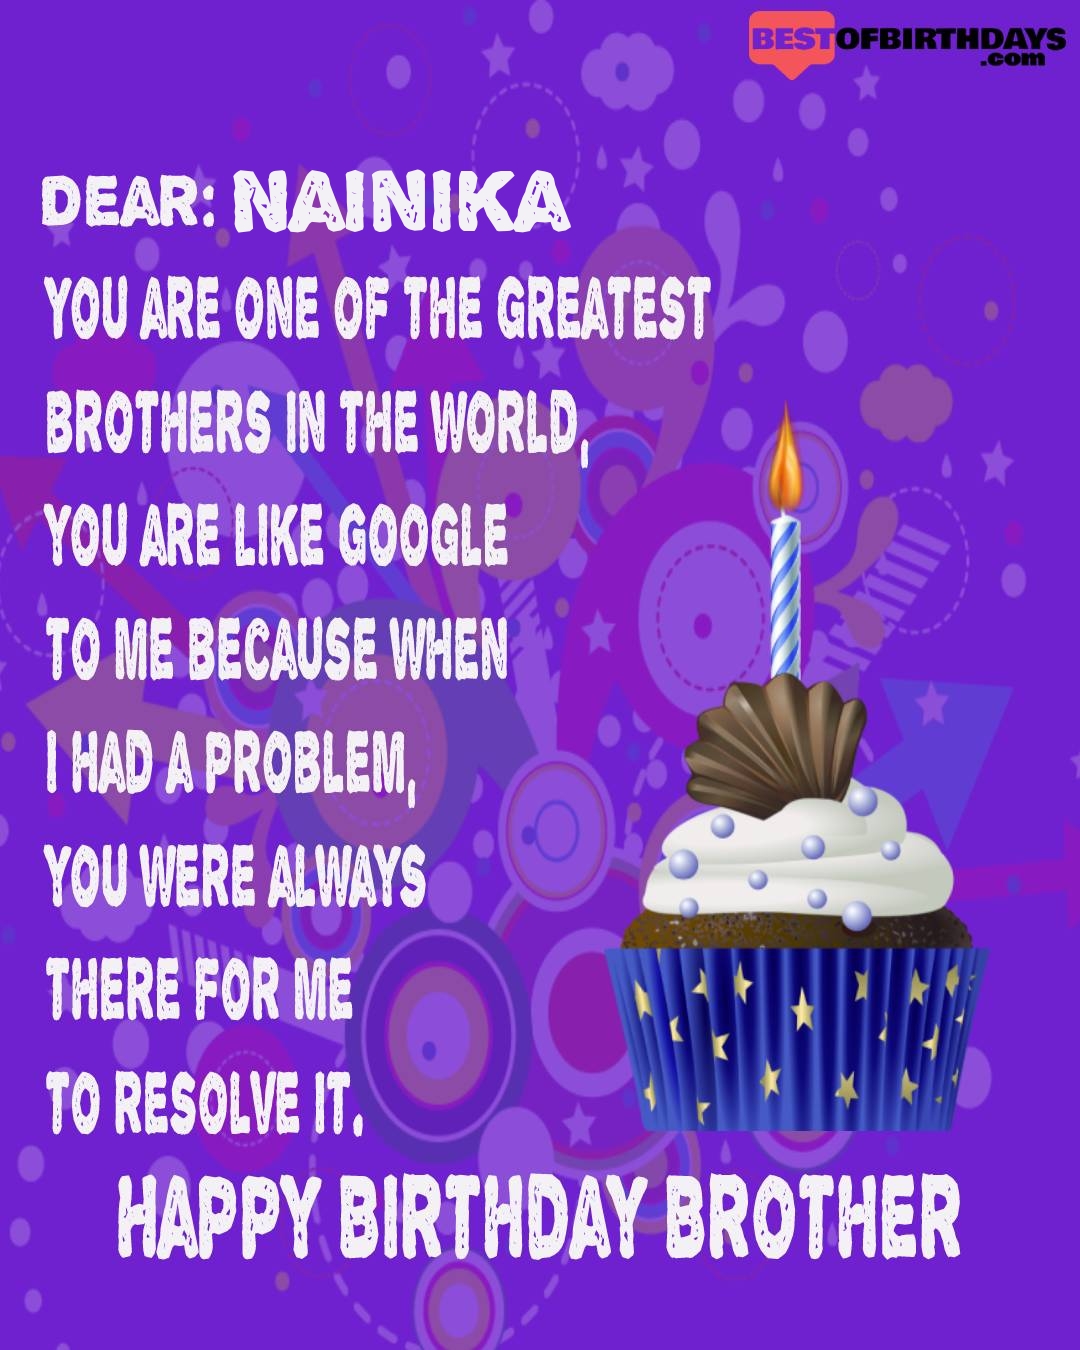 Happy birthday nainika bhai brother bro